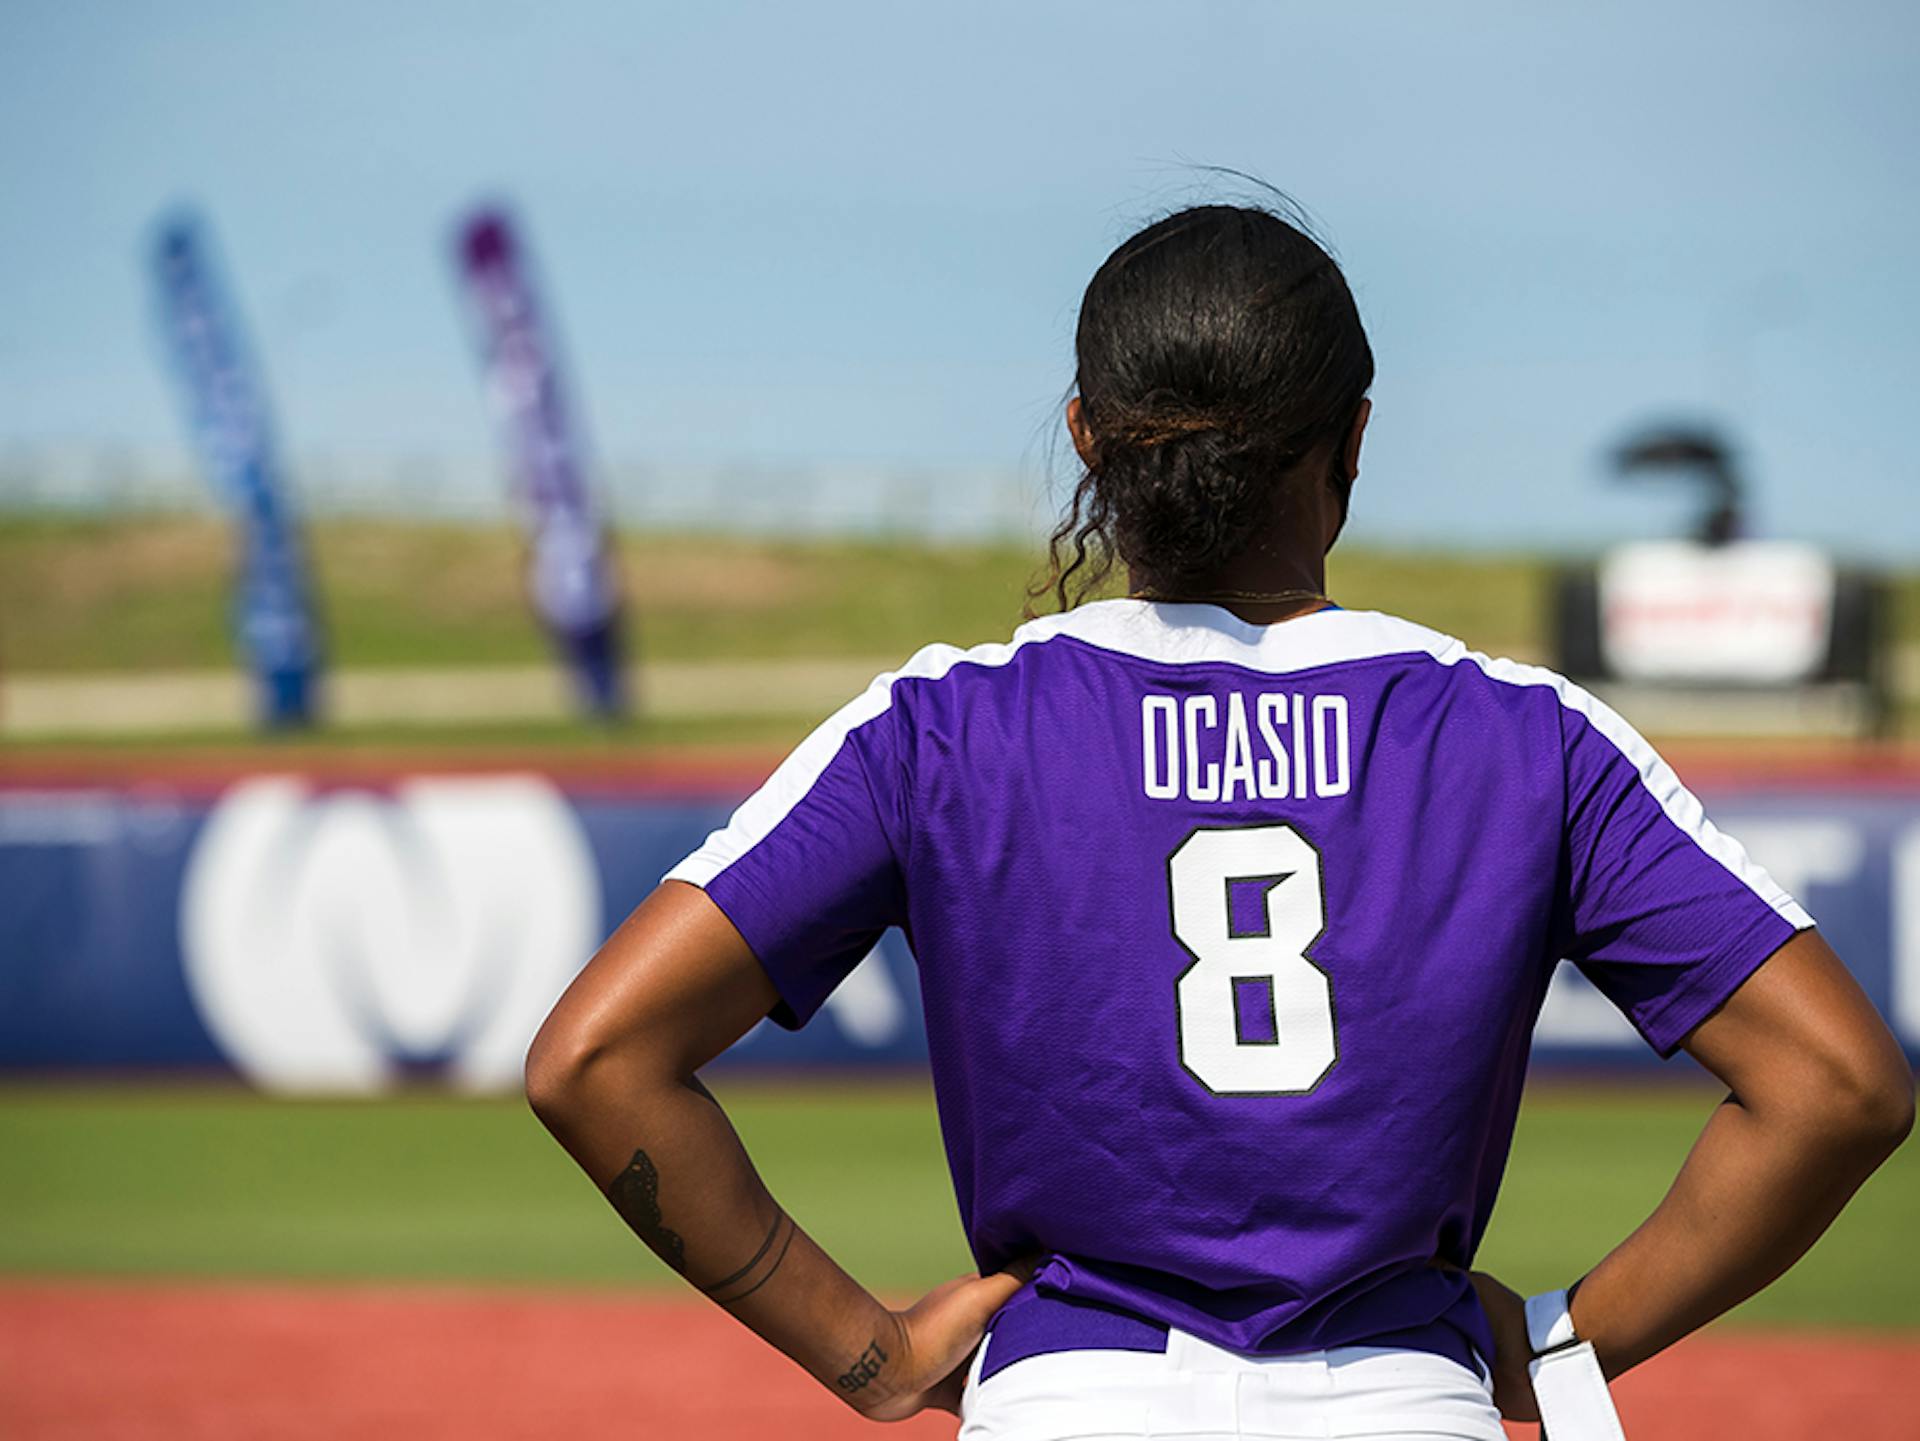 Aleshia Ocasio on the field.